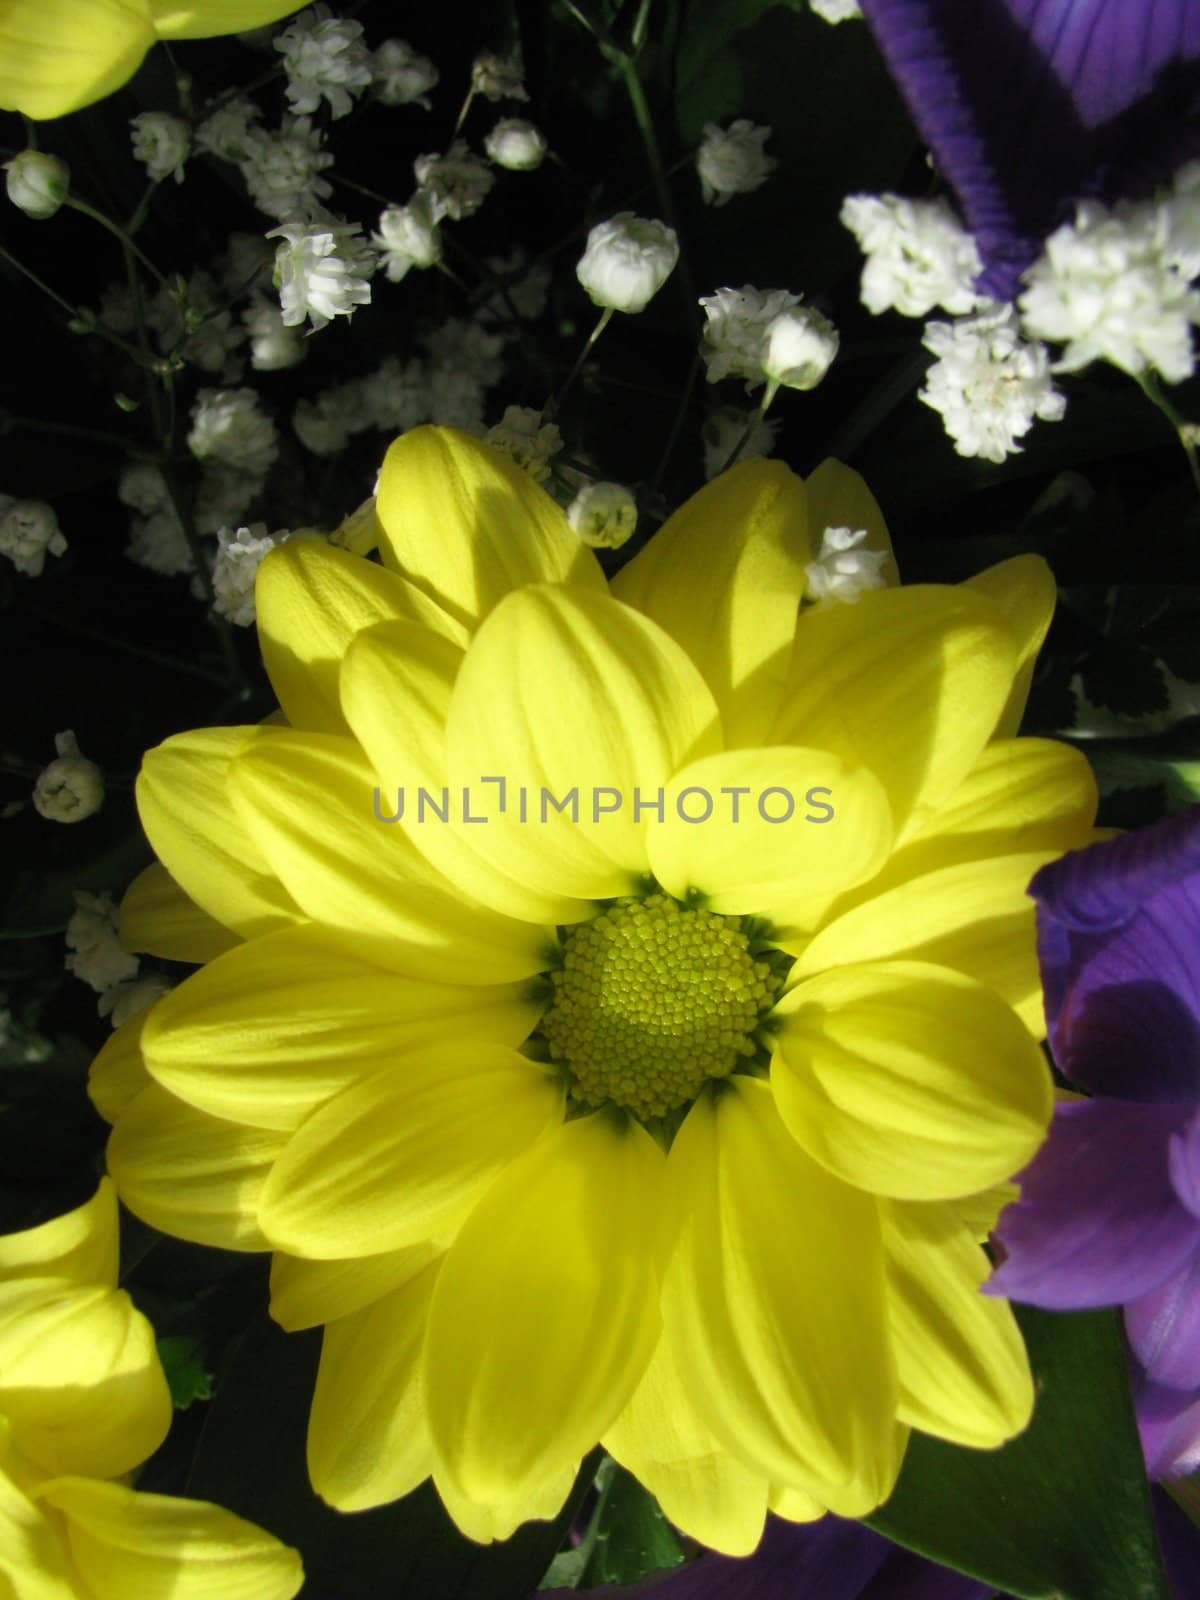 Petal, bud, flower, flowers, flora, plant, summer, object, background